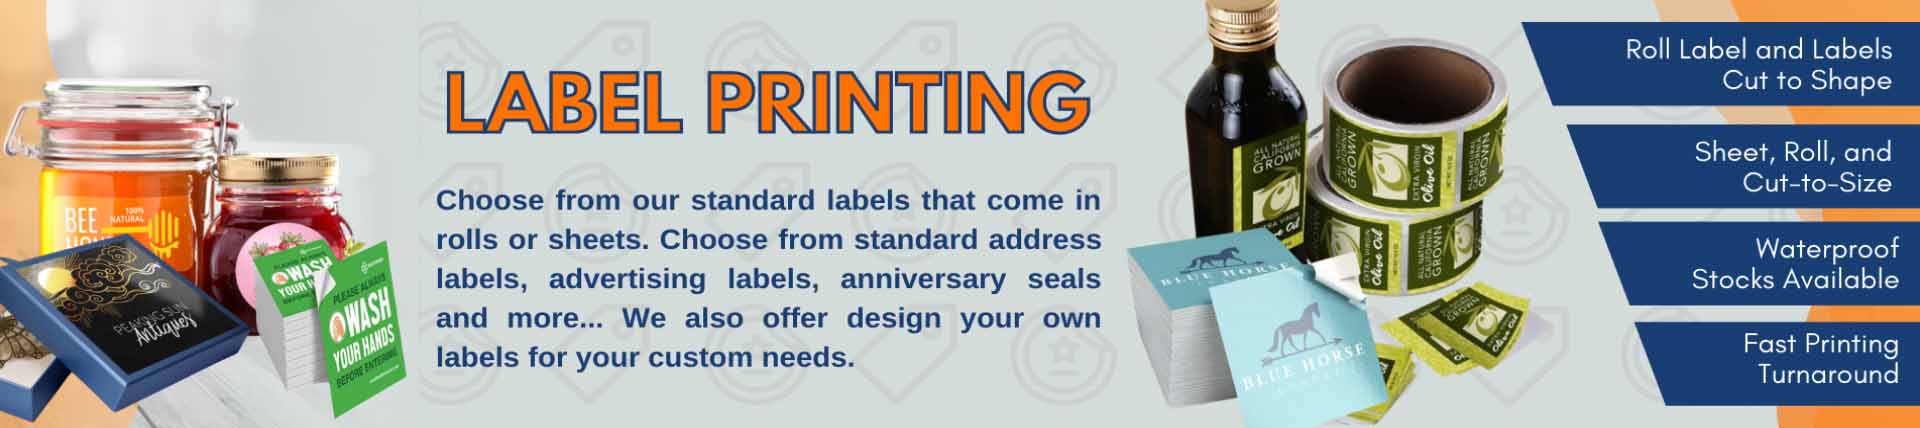 Label_Printing.jpg